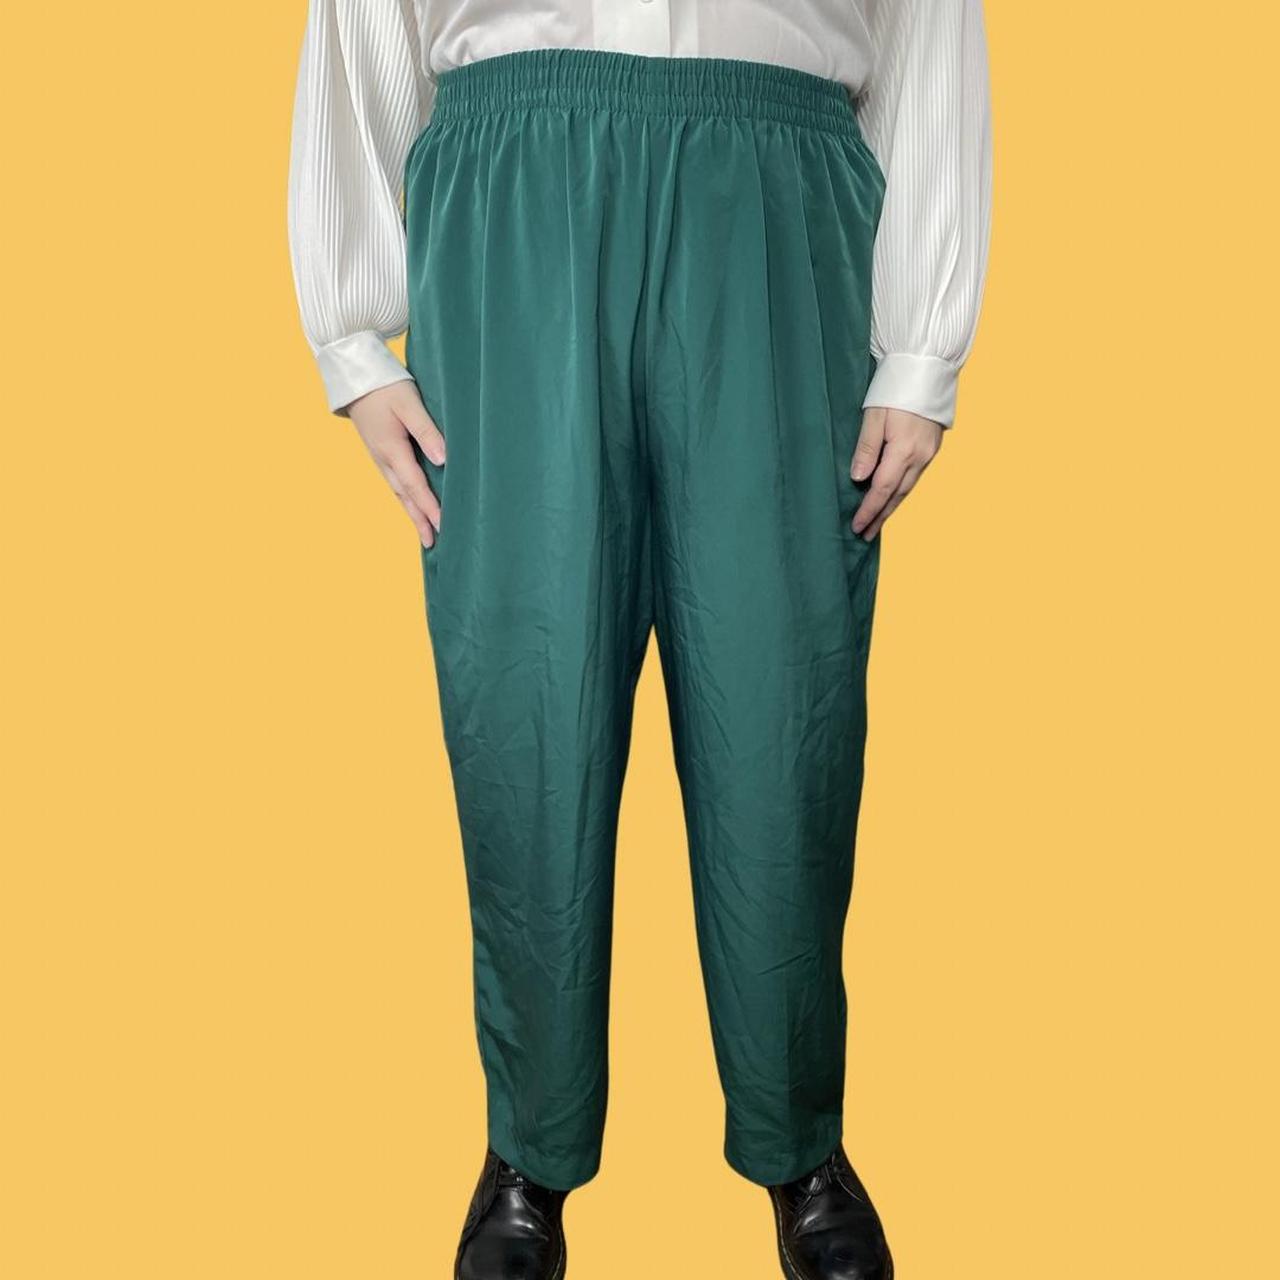 Vintage green pants Tag: S.G. Sport collection 100%... - Depop